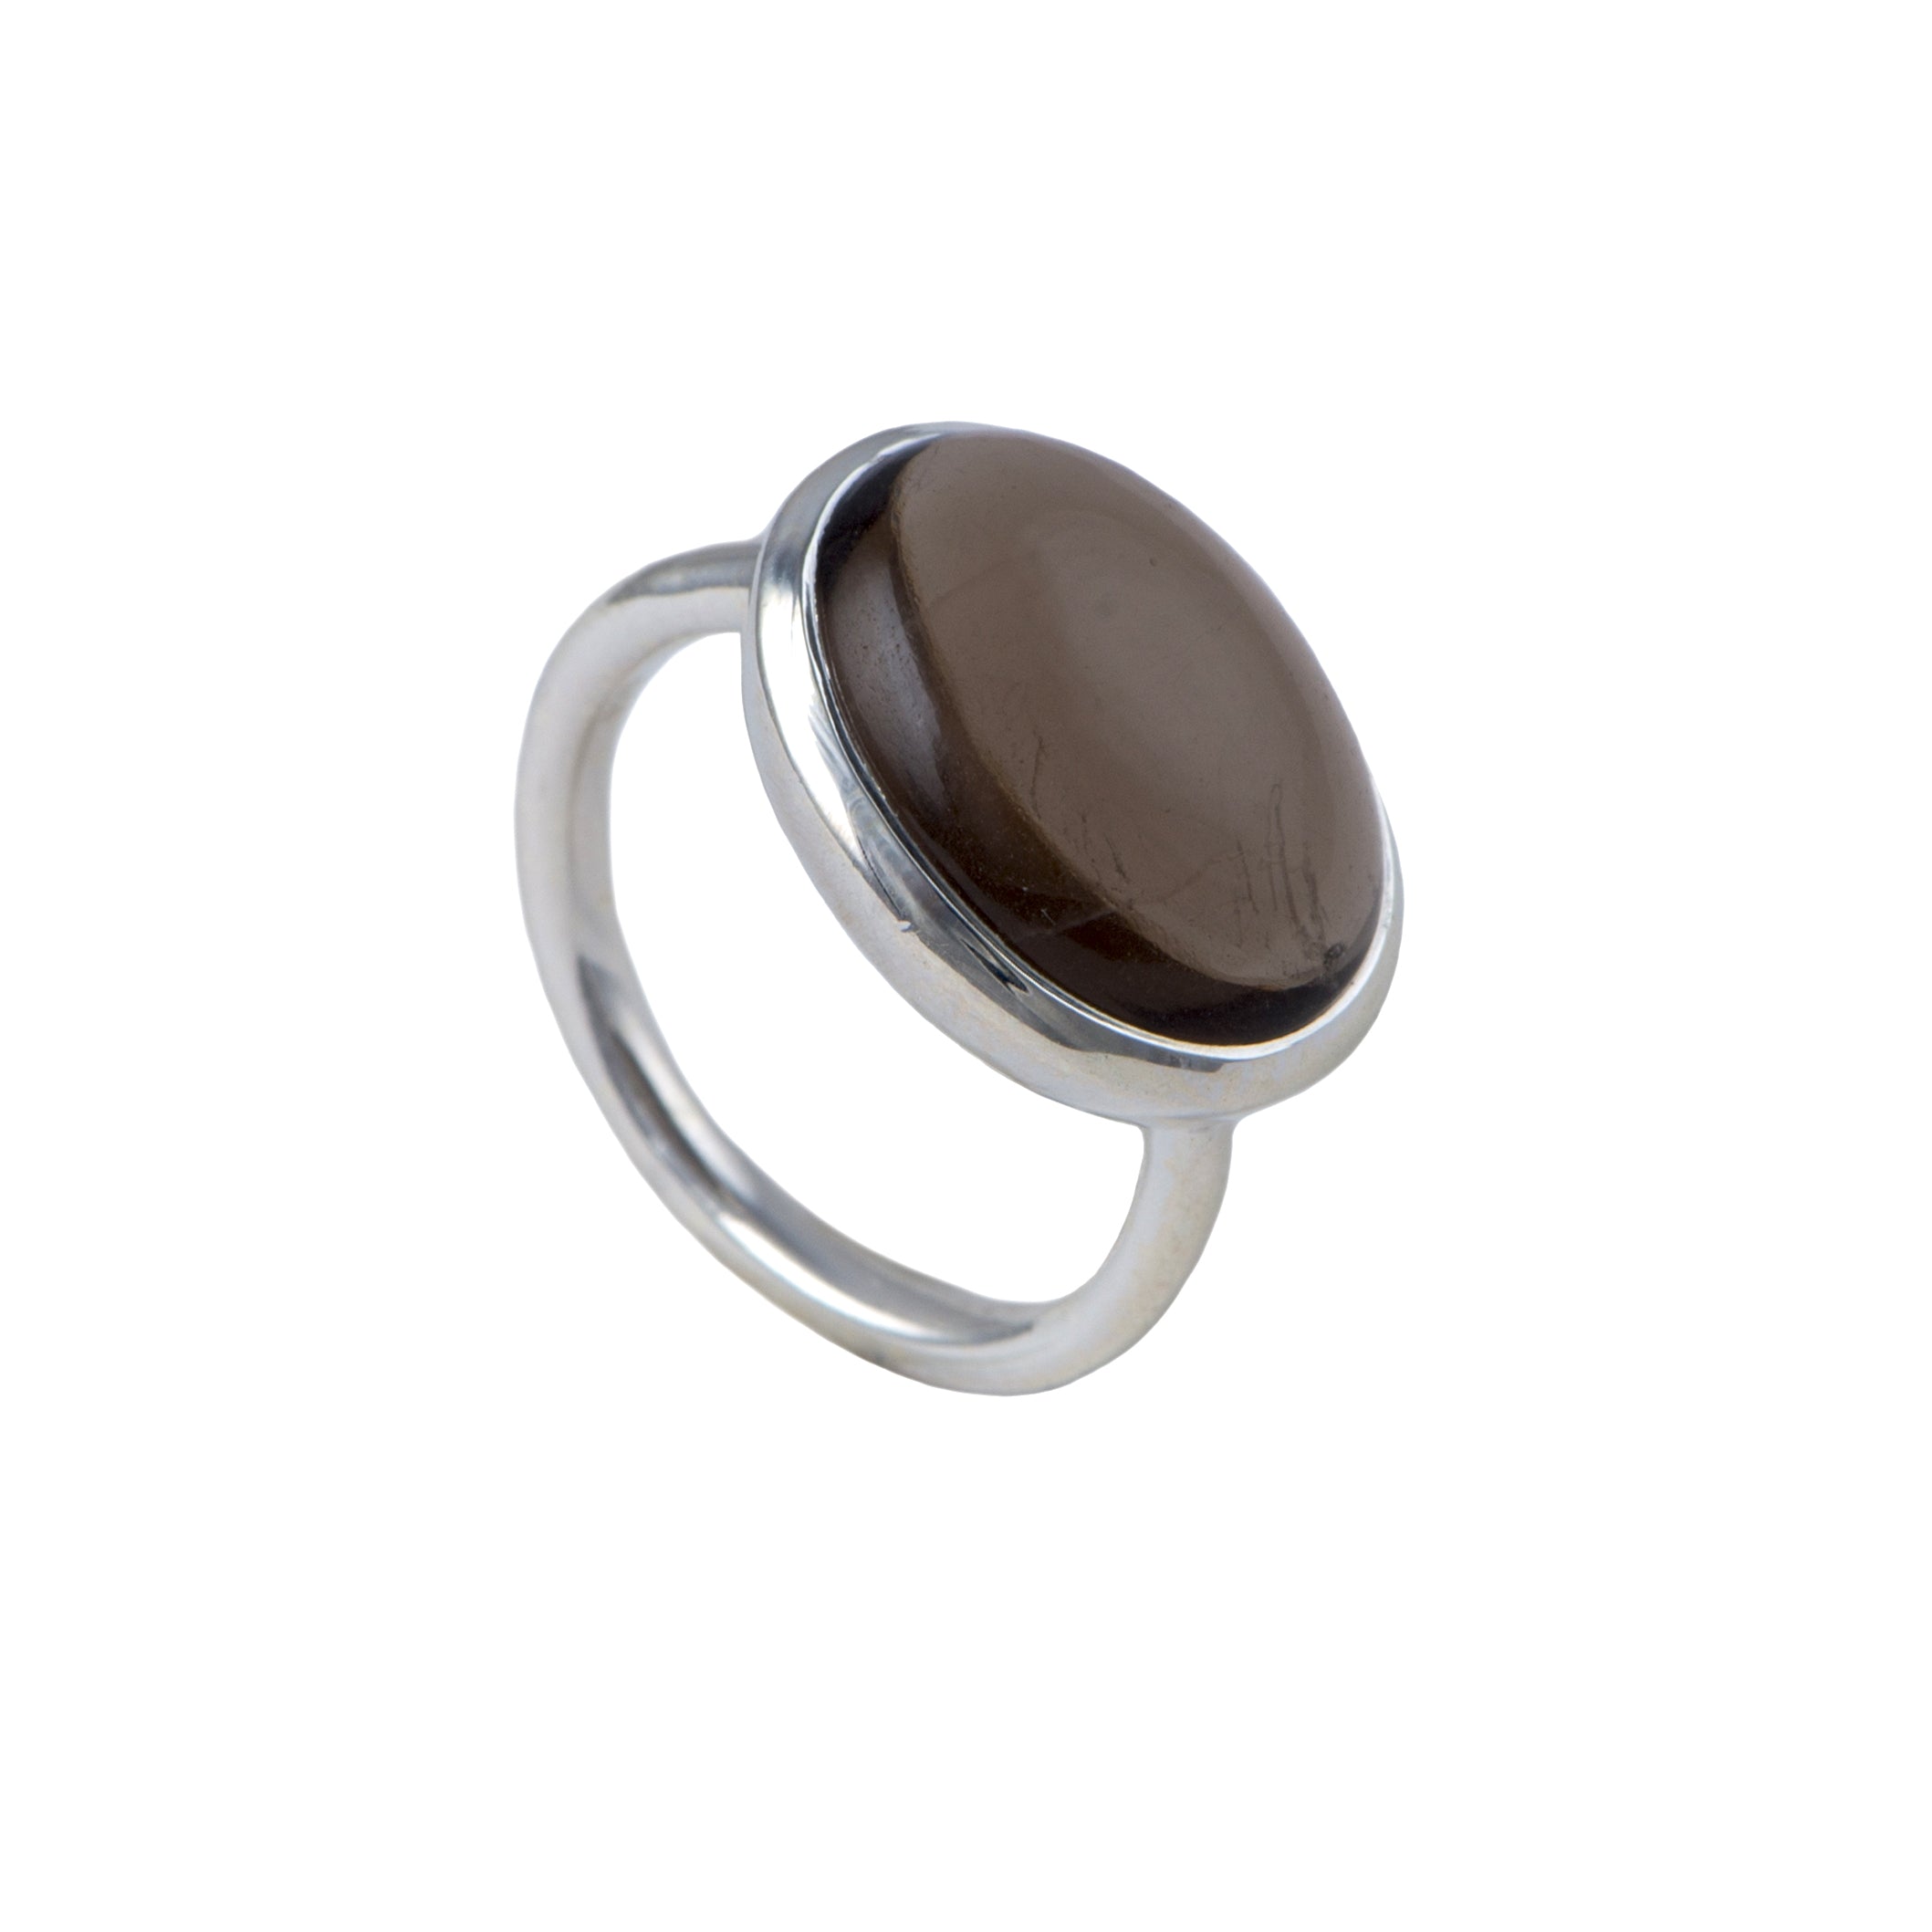 Cabochon Oval Cut Natural Gemstone Sterling Silver Ring - Smoky Quartz